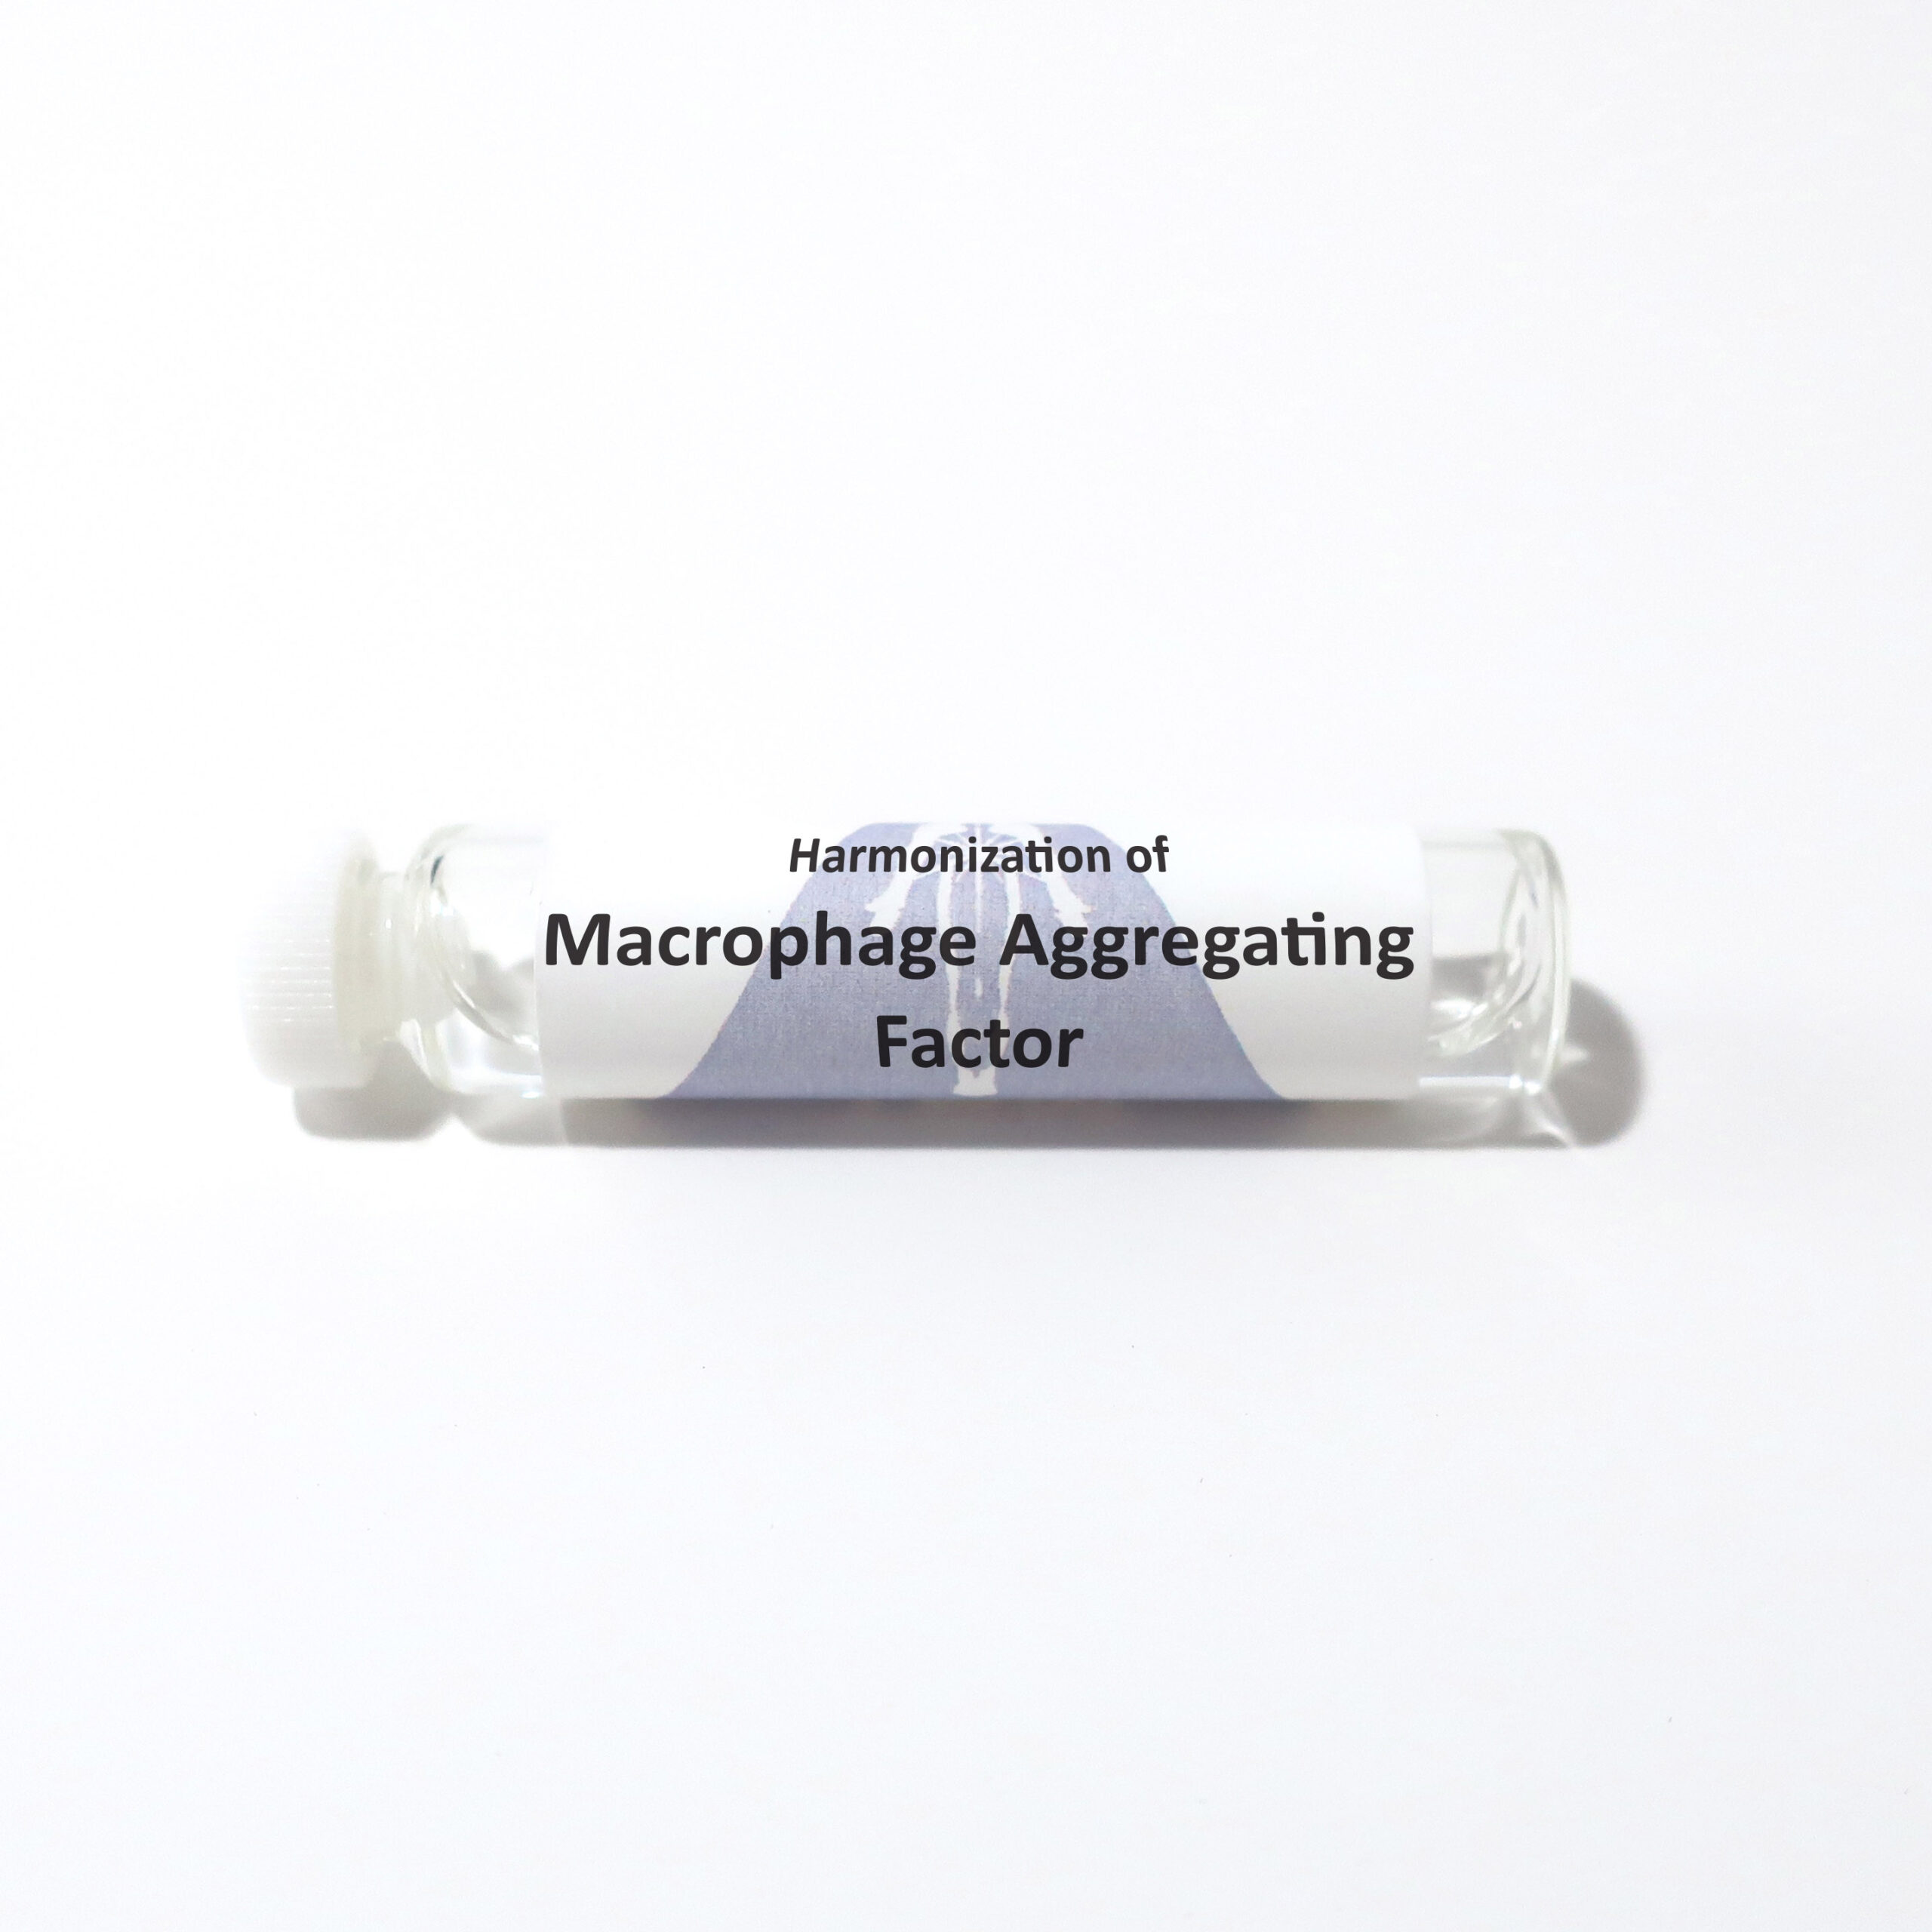 Macrophage Aggregating Factor